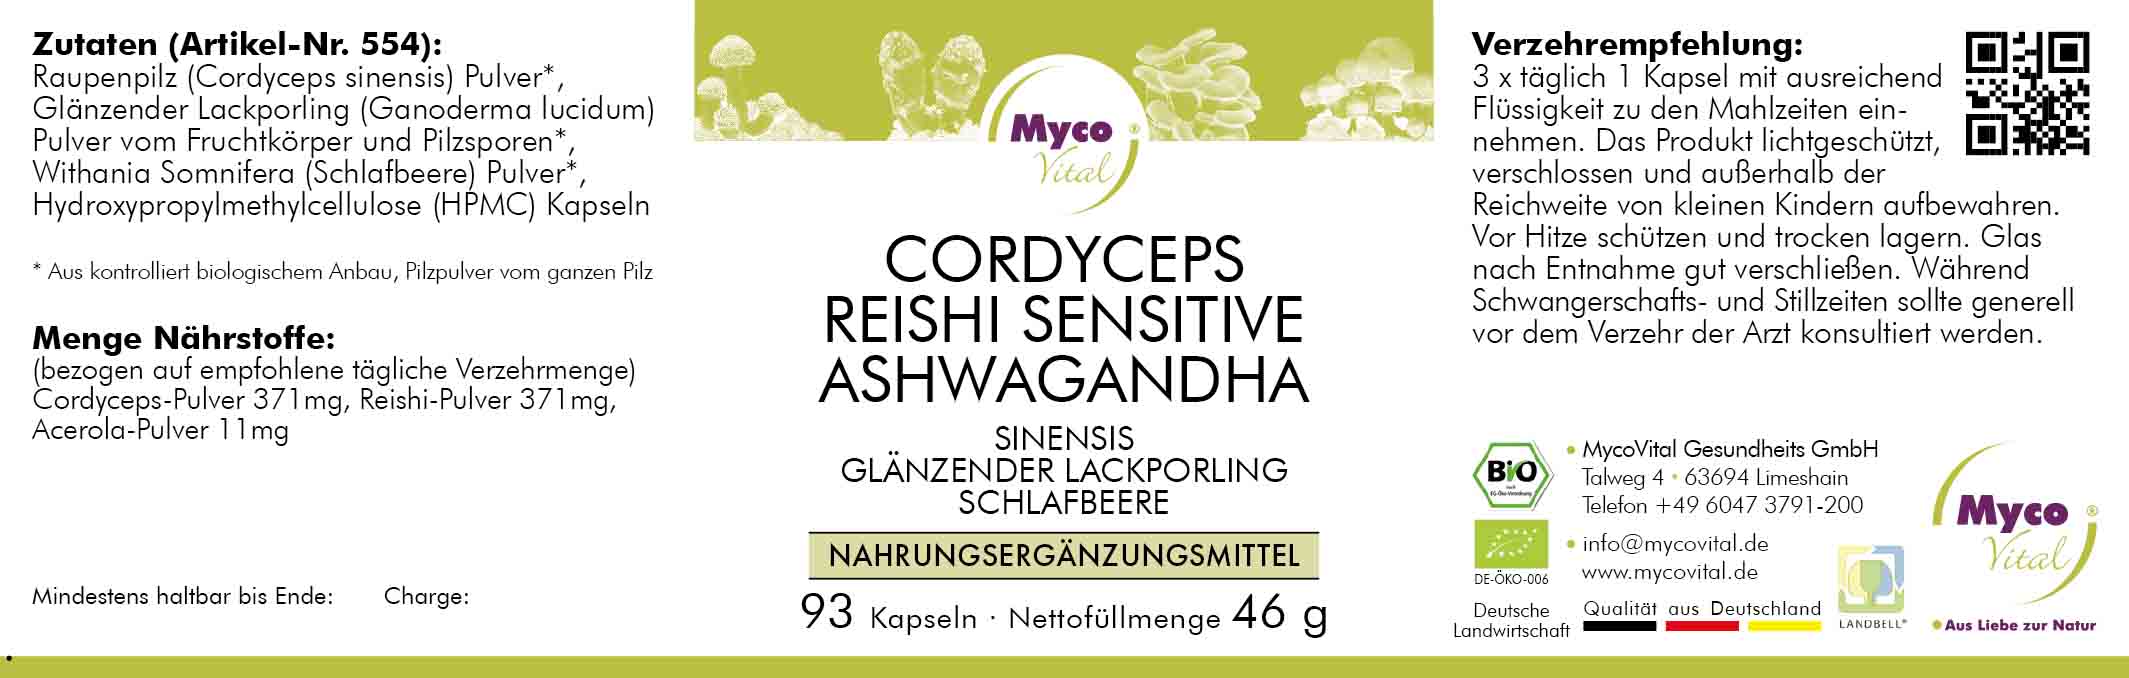 Cordyceps-Reishi sens. ashwagandha biologica in polvere in capsule (miscela 0554)